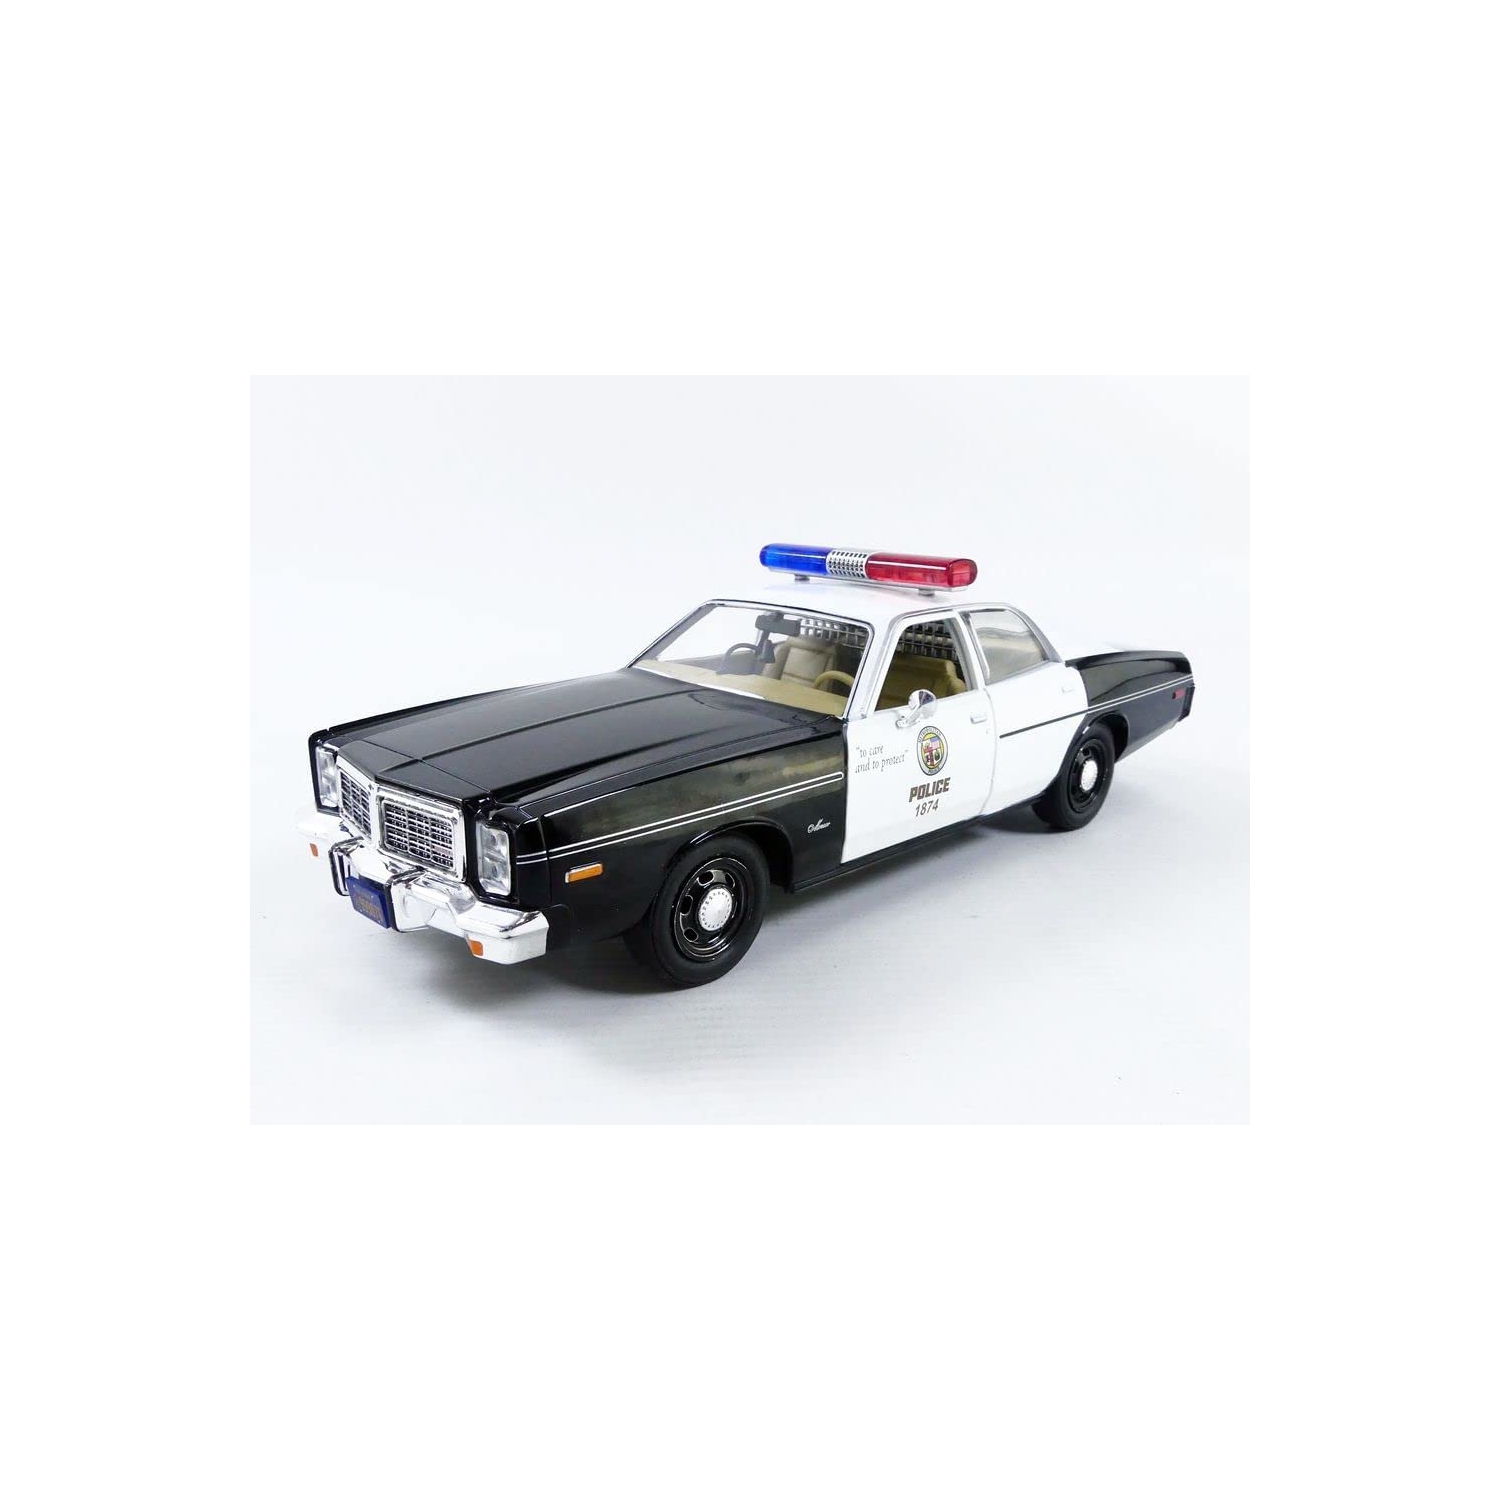 Greenlight 1977 Dodge Monaco Metropolitan Police, The Terminator - 44790C 1/64 Scale Diecast Model Toy Car